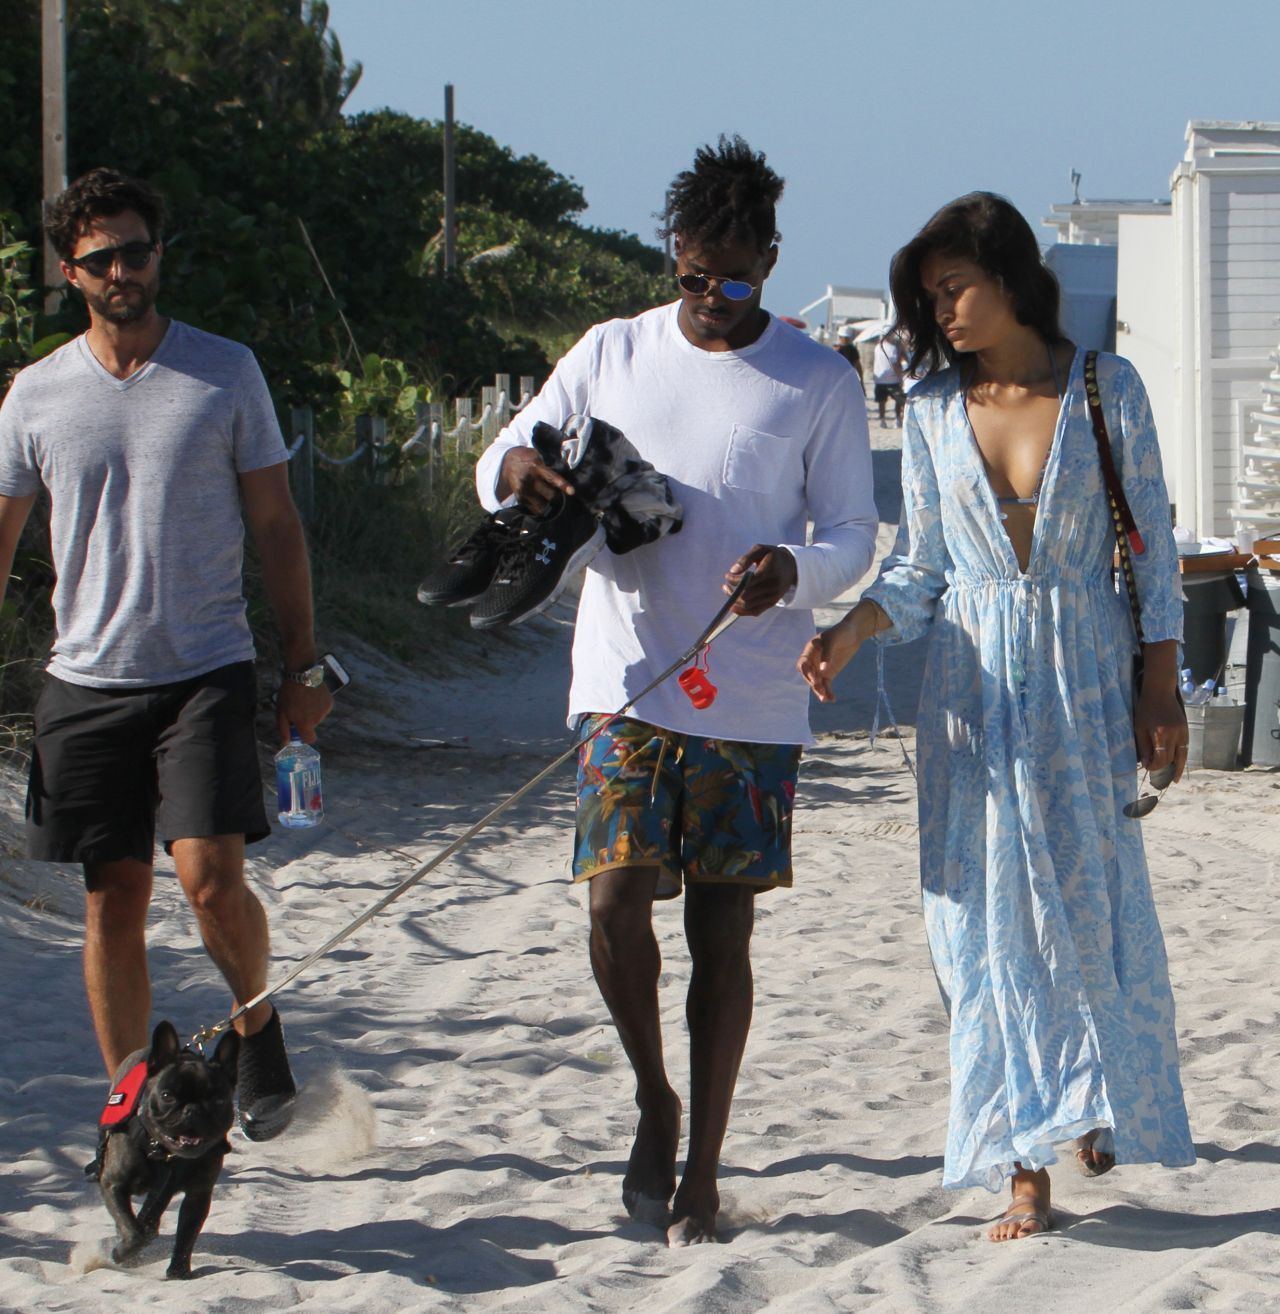 Shanina Shaik With Boyfriend DJ Ruckus on The Beach in Miami Beach 4/24 ...